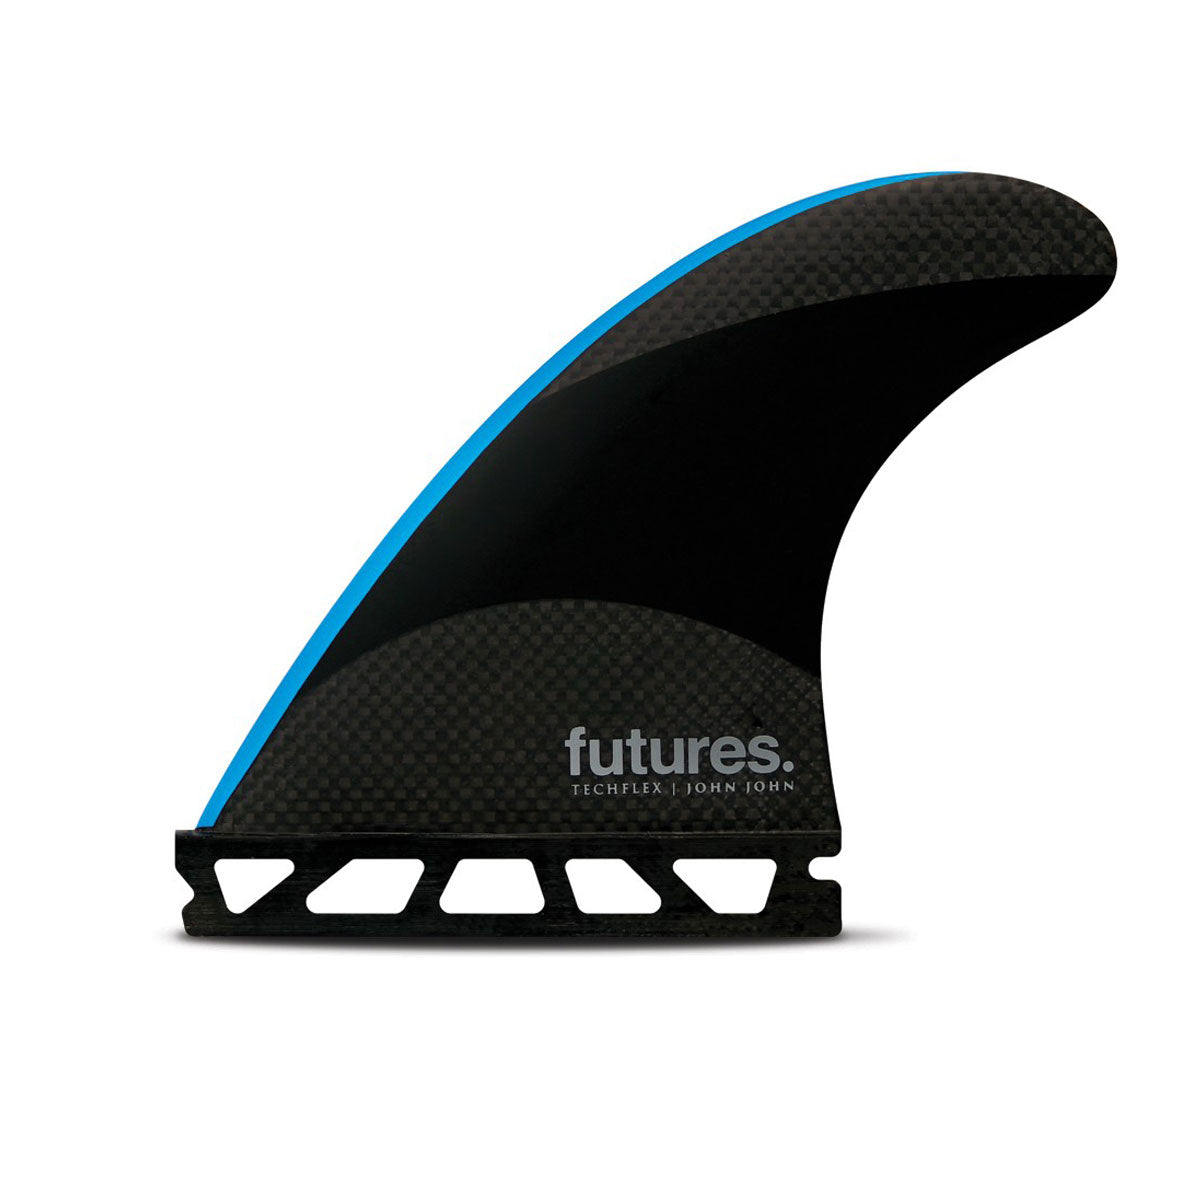 Futures Fins John John S Techflex Thrusters - Black / Blue